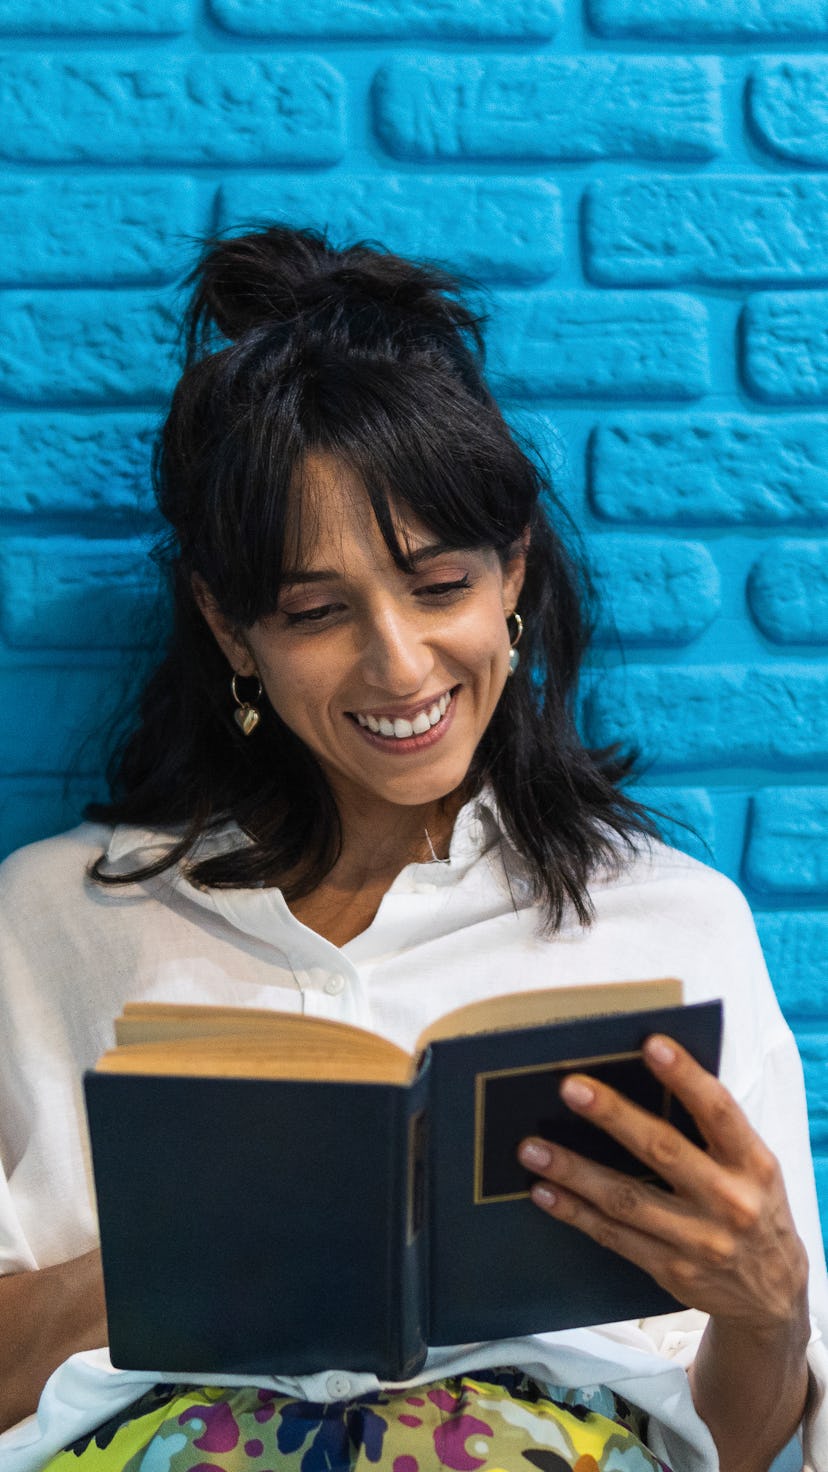 A reader in a crisp white shirt smiles at an open book.